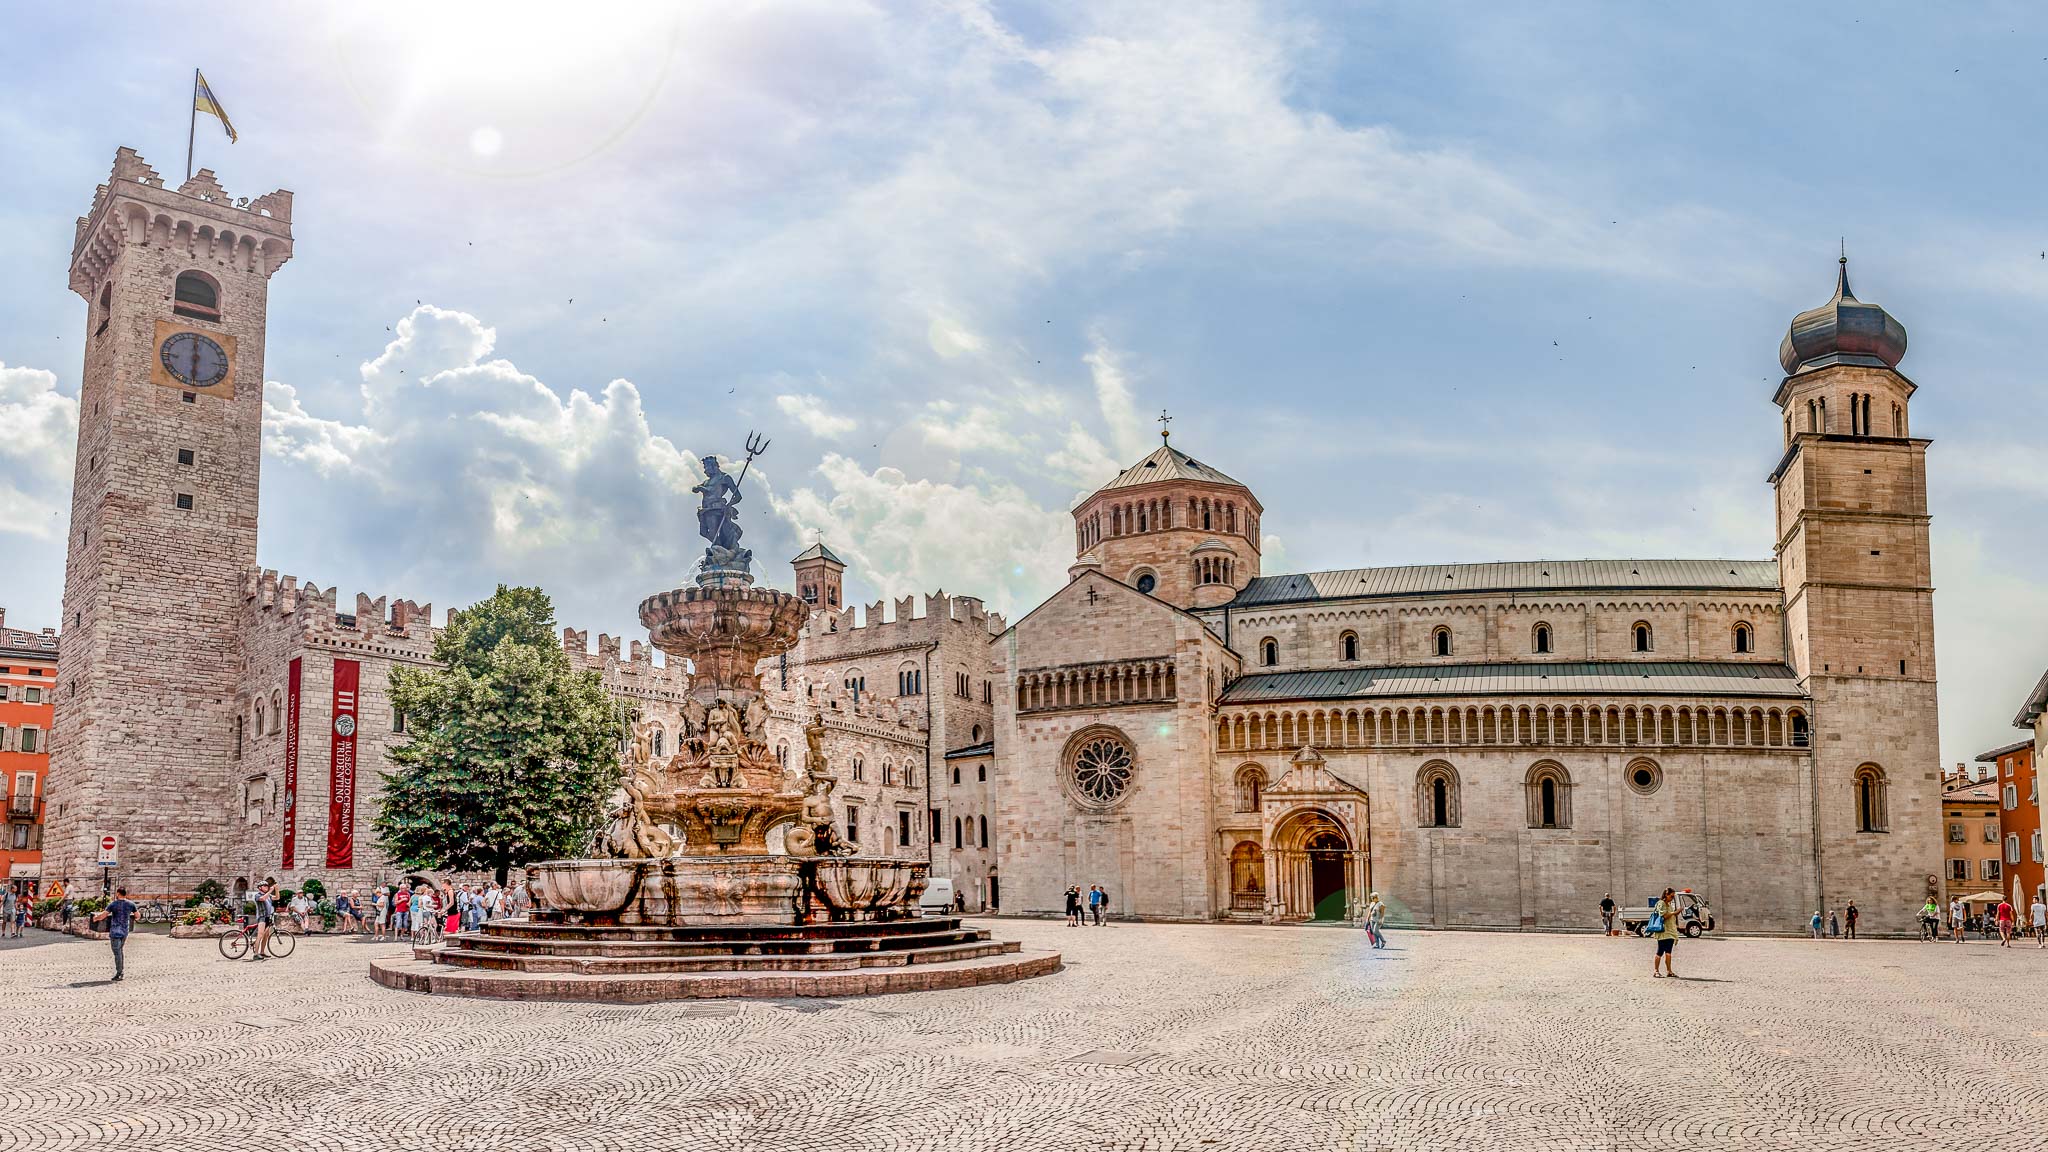 Trento Cathedral, main square in Trento